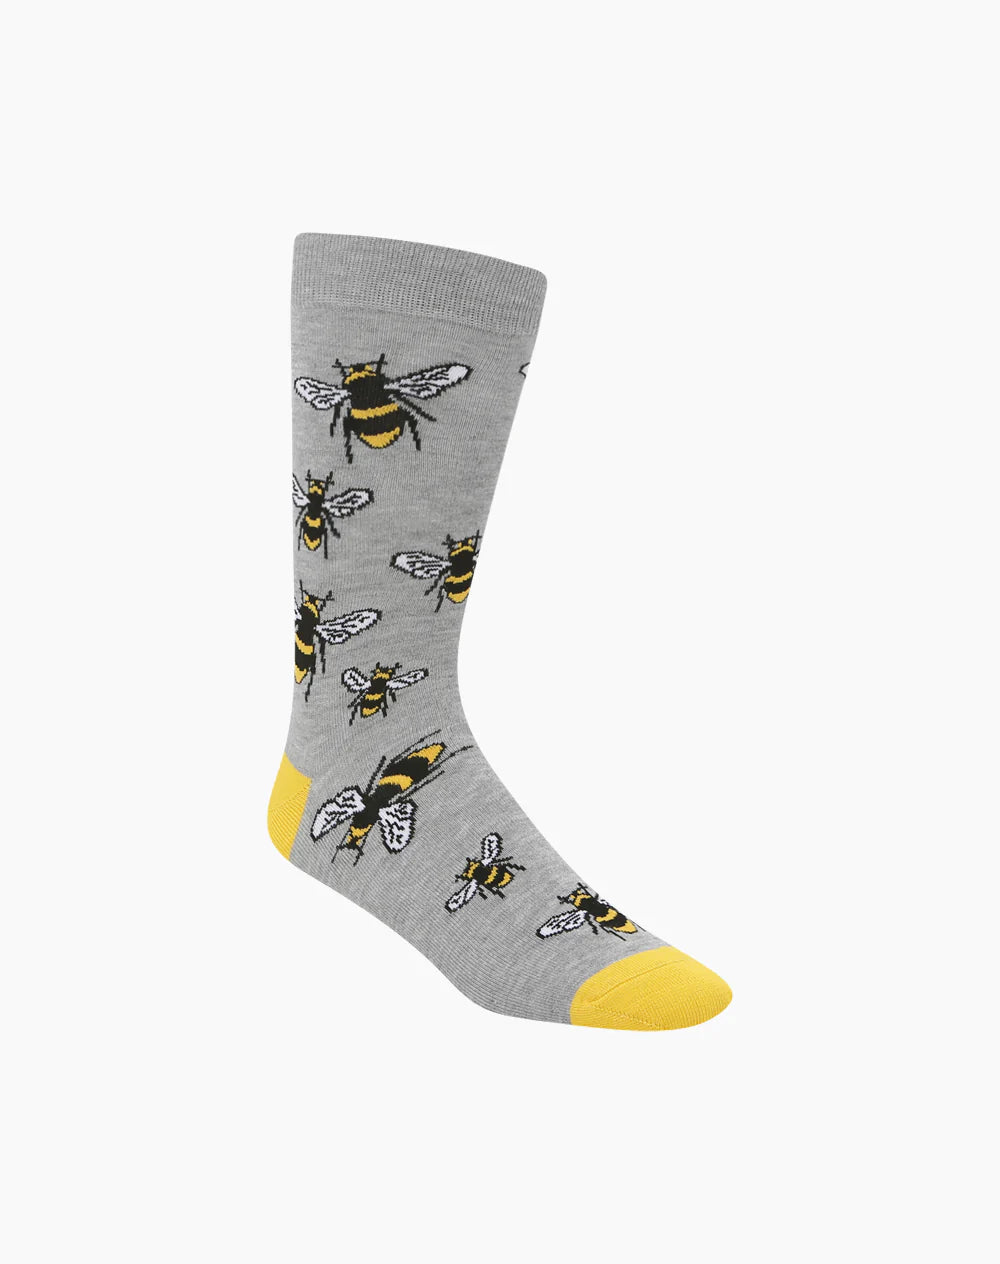 Bumble Bee Men's Bamboo Crew Socks - The Sockery